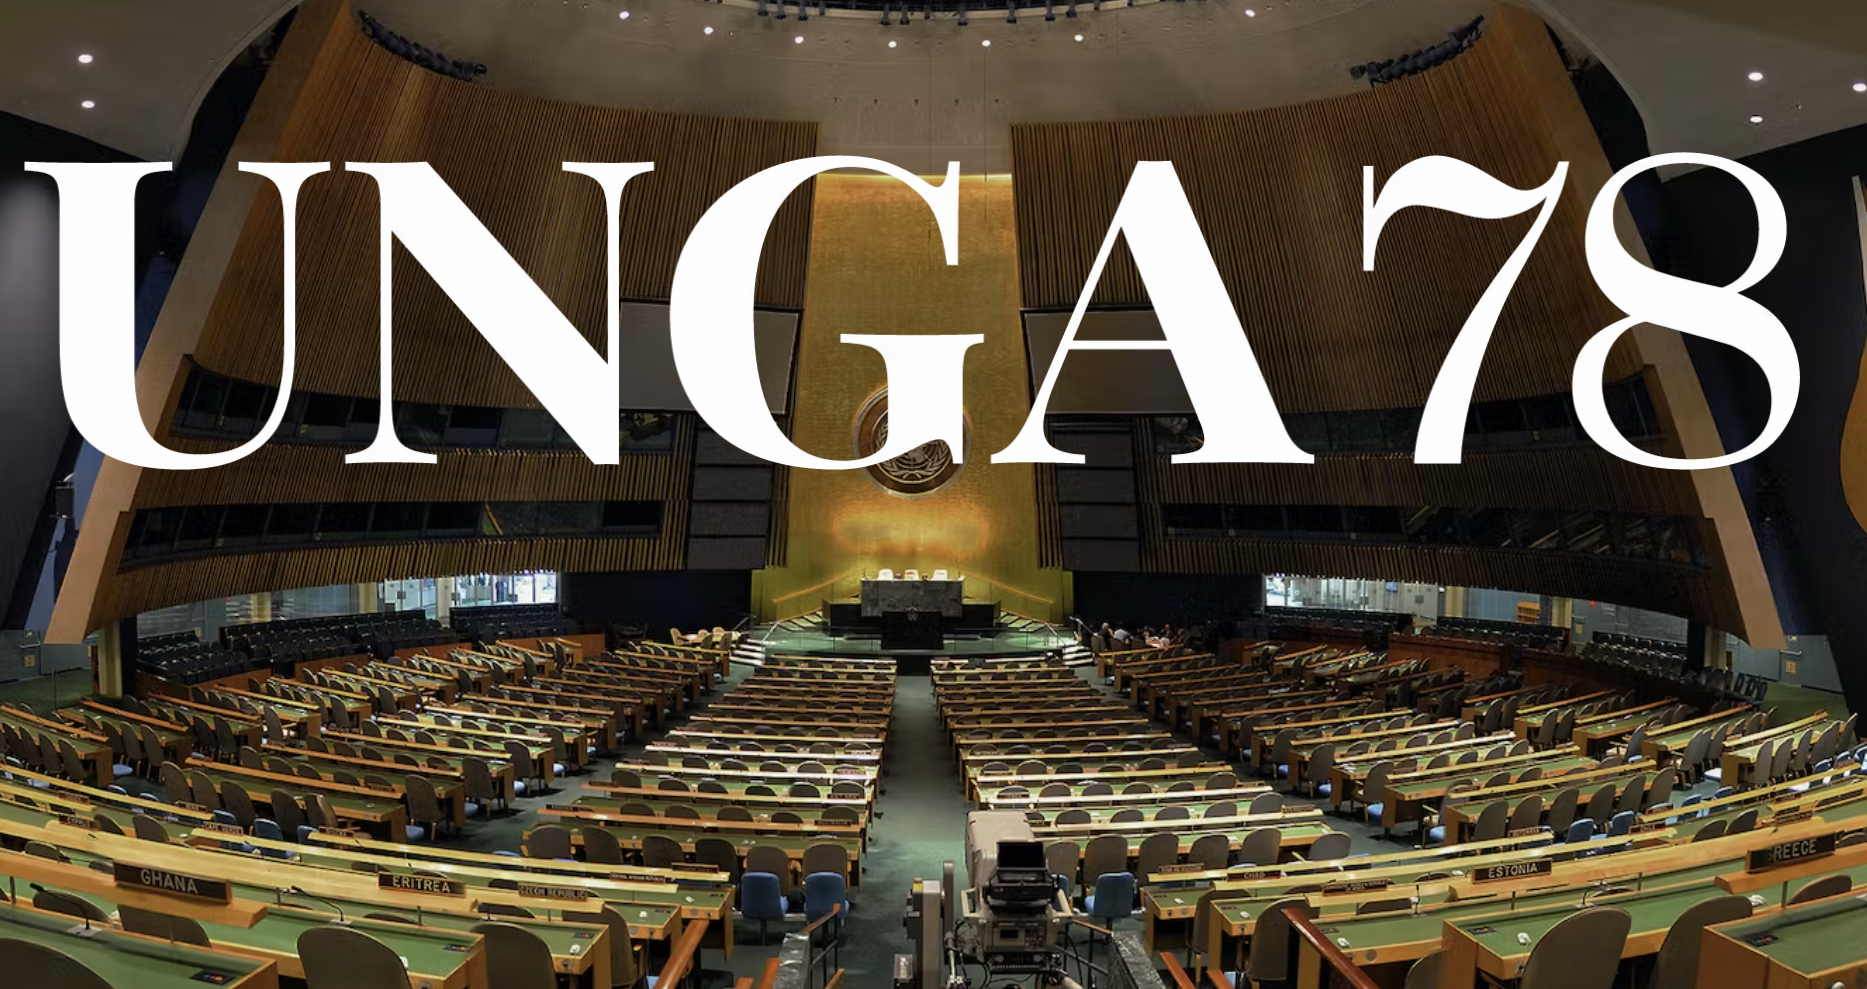 UN Foundation: UNGA 78 Guide